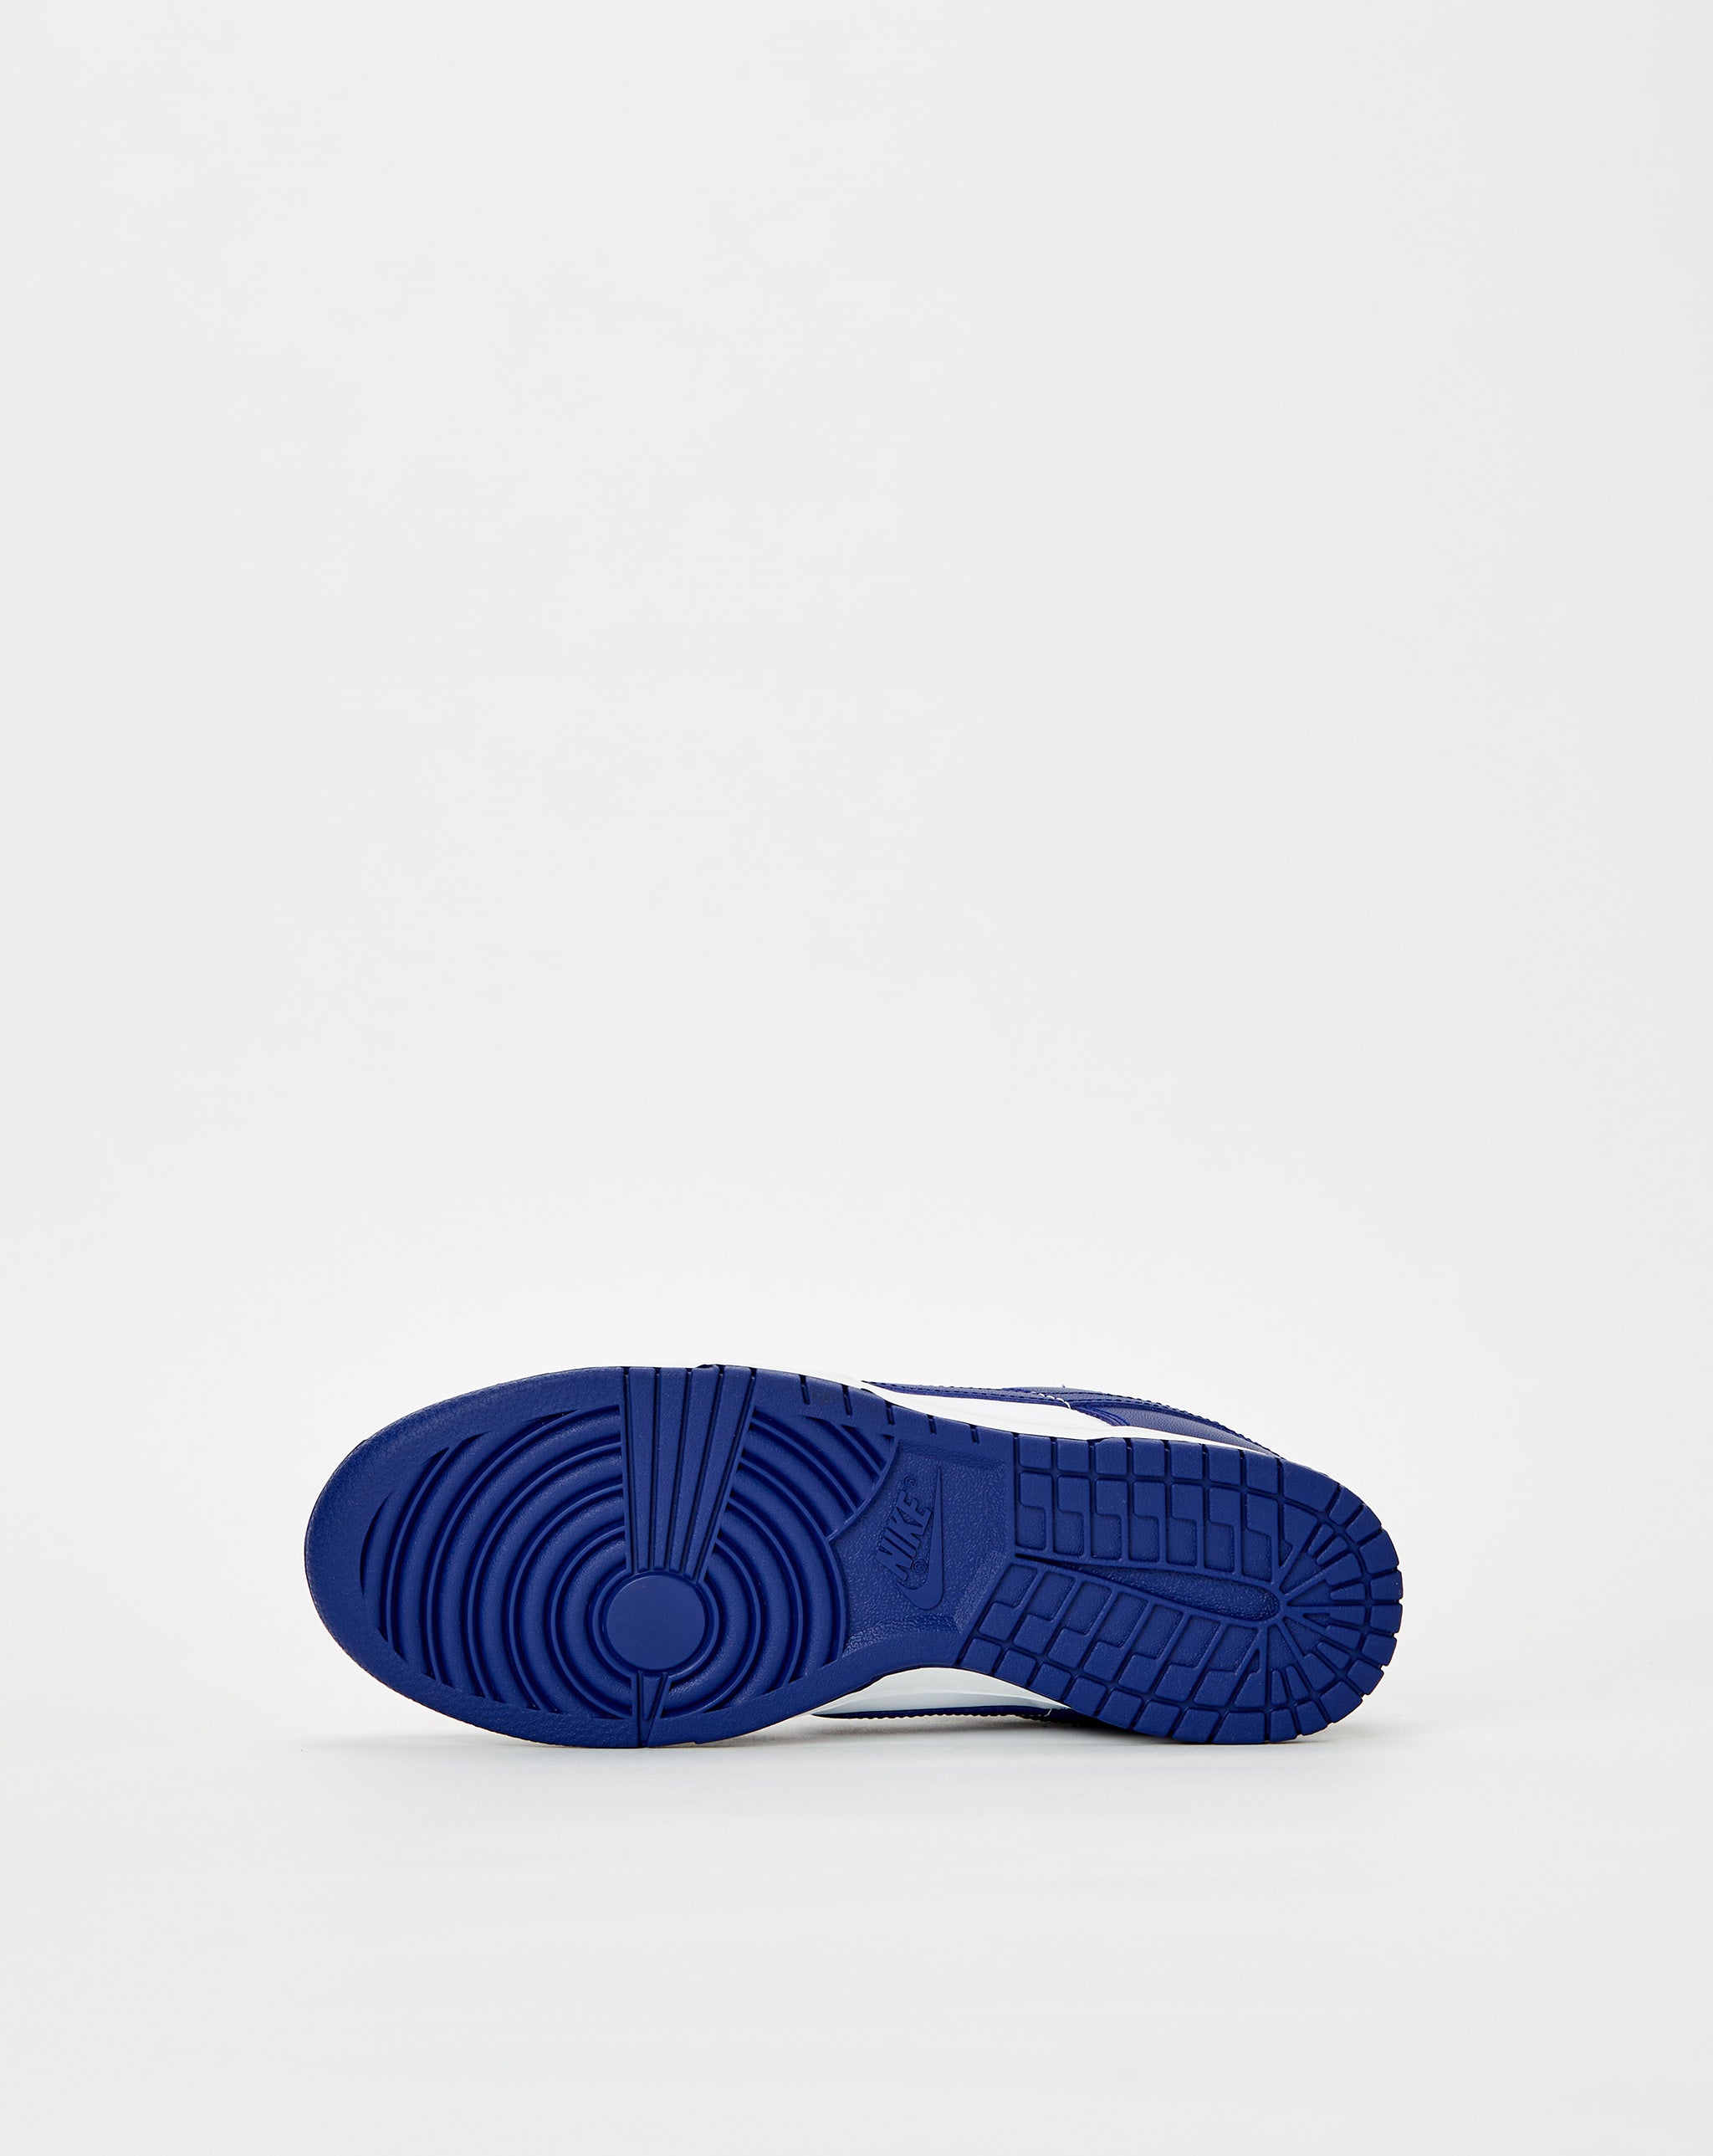 Nike hailey baldwin shoe style heels photos  - Cheap Urlfreeze Jordan outlet